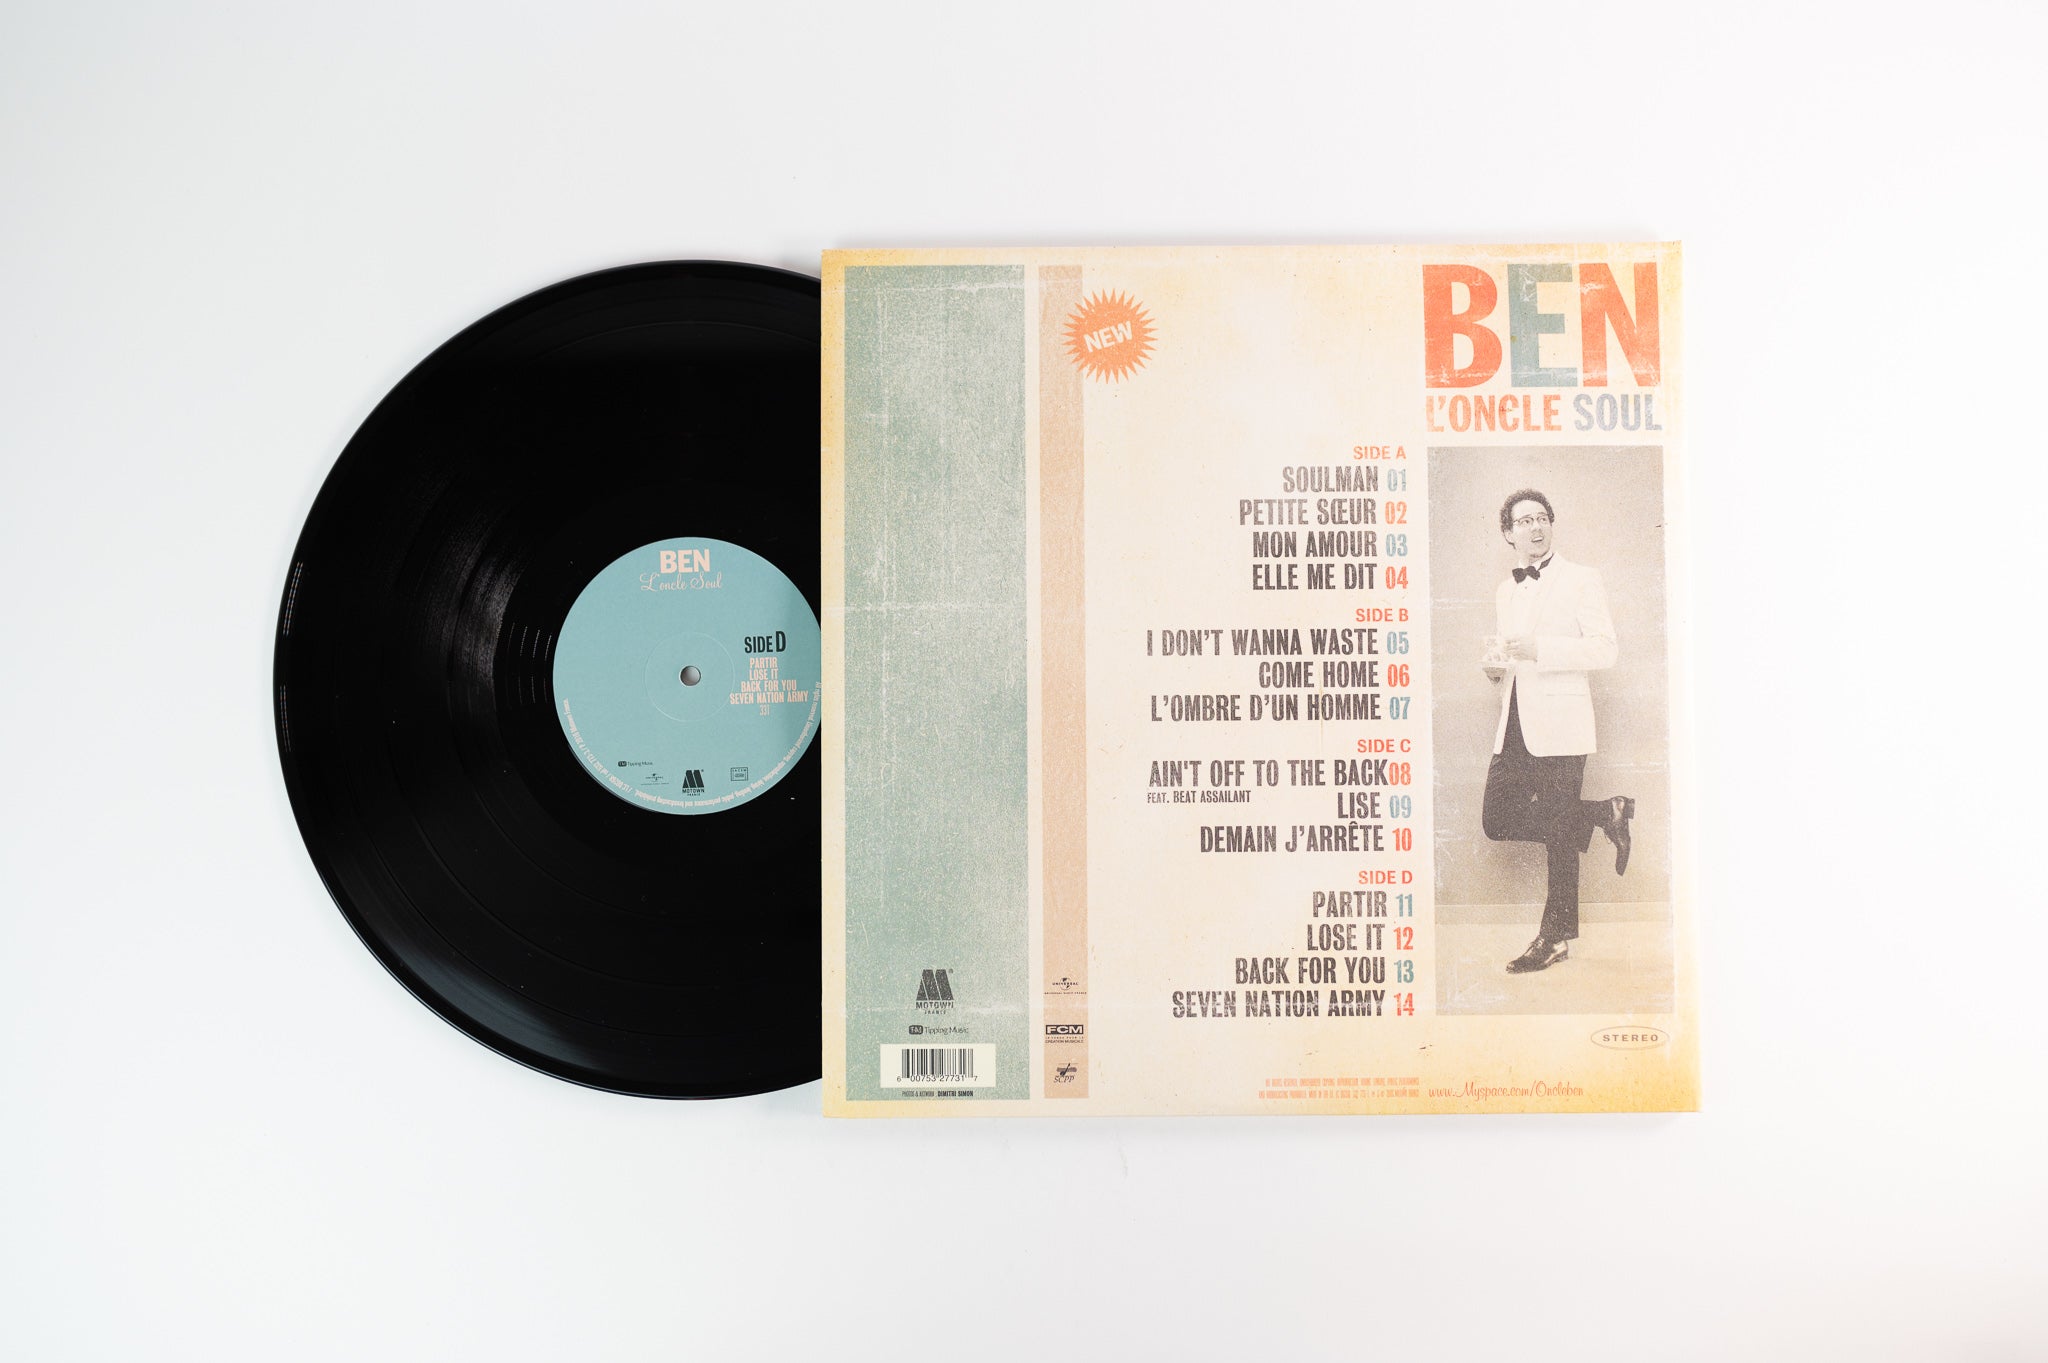 Ben L'Oncle Soul - Ben L'Oncle Soul on Motown France